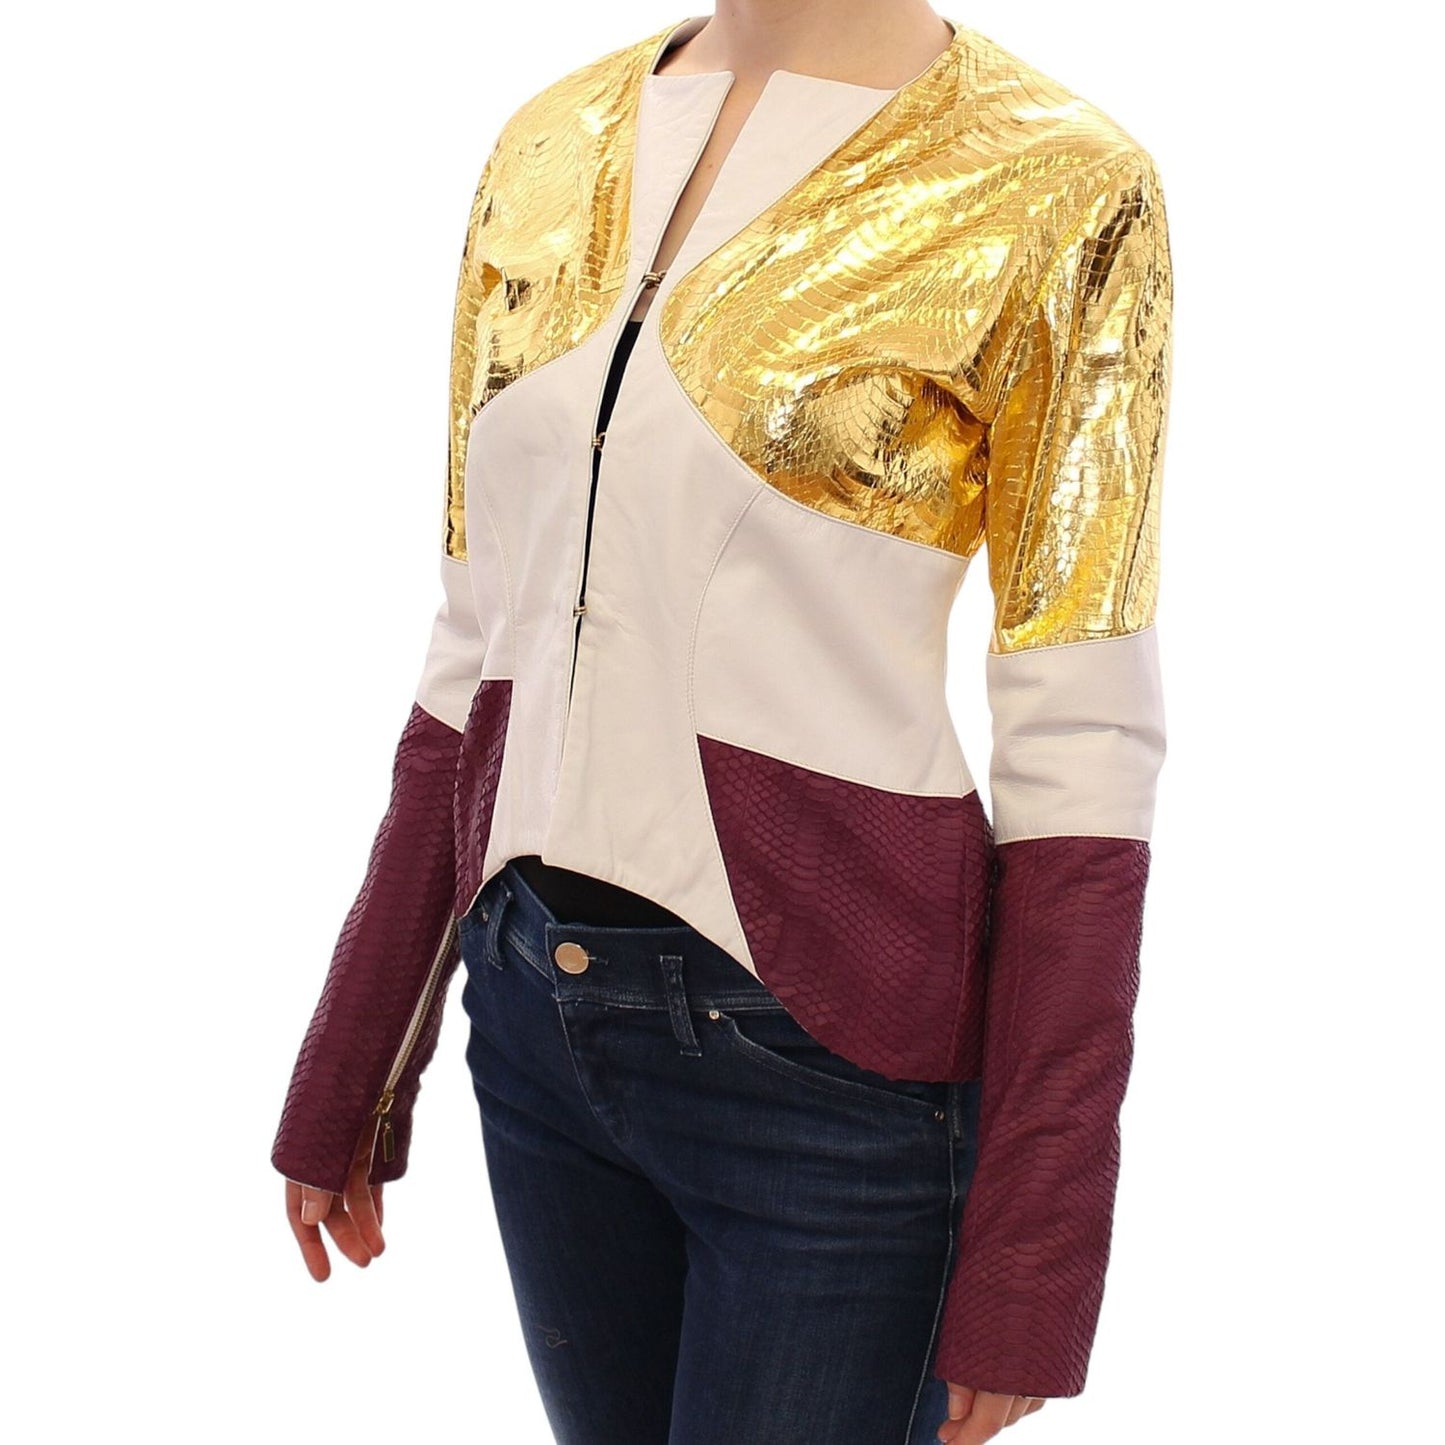 Vladimiro Gioia Elegant Metallic Croc Print Leather Jacket Coats & Jackets white-gold-purple-leather-jacket